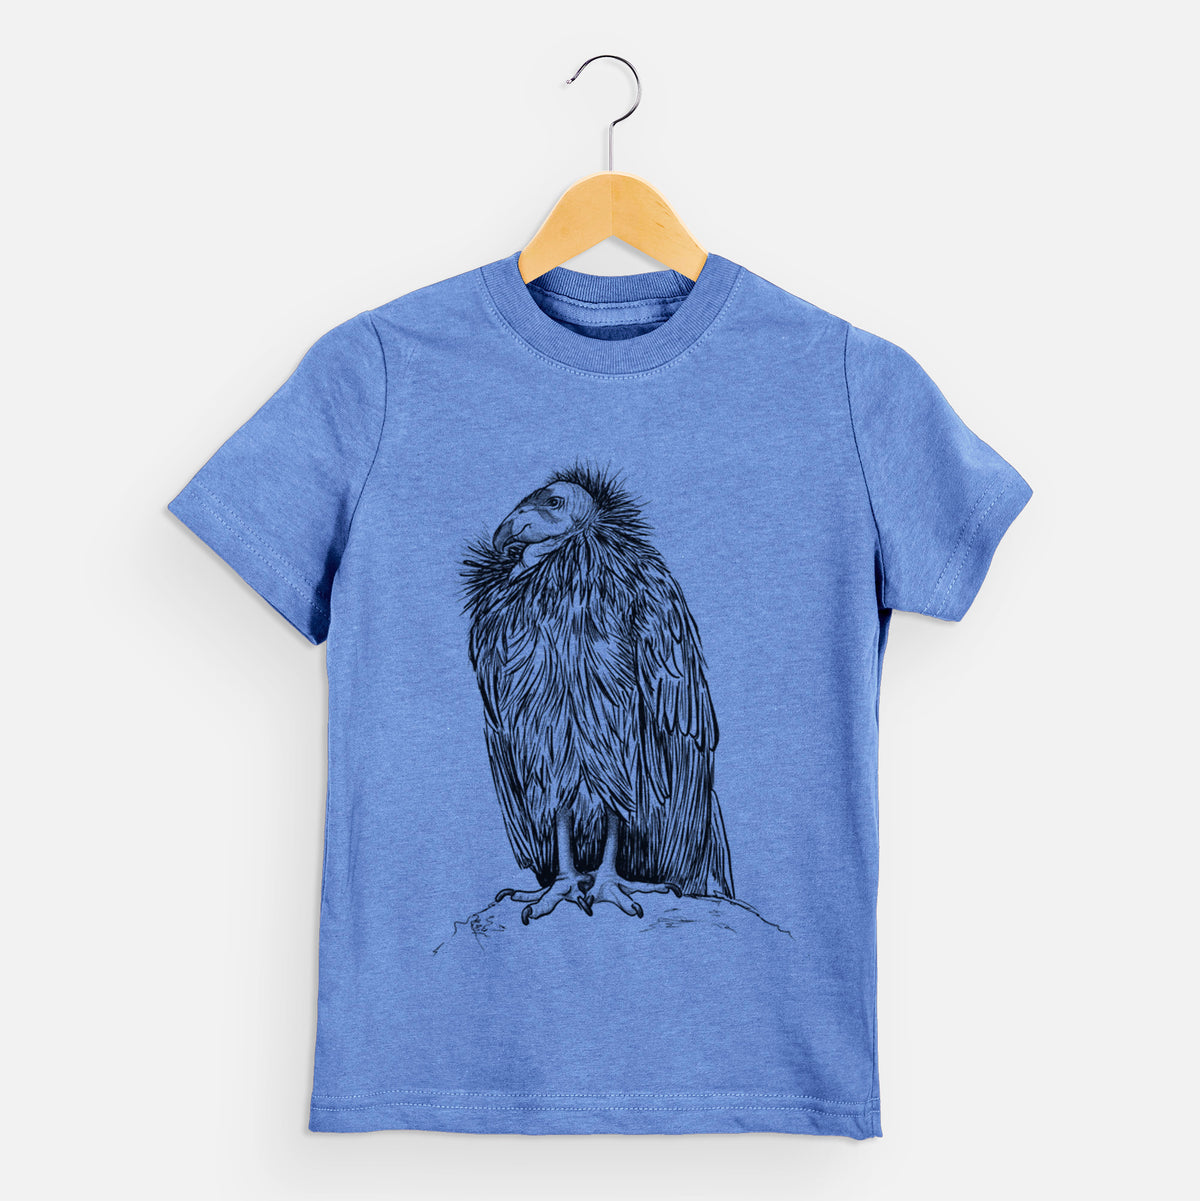 California Condor - Gymnogyps californianus - Kids Shirt